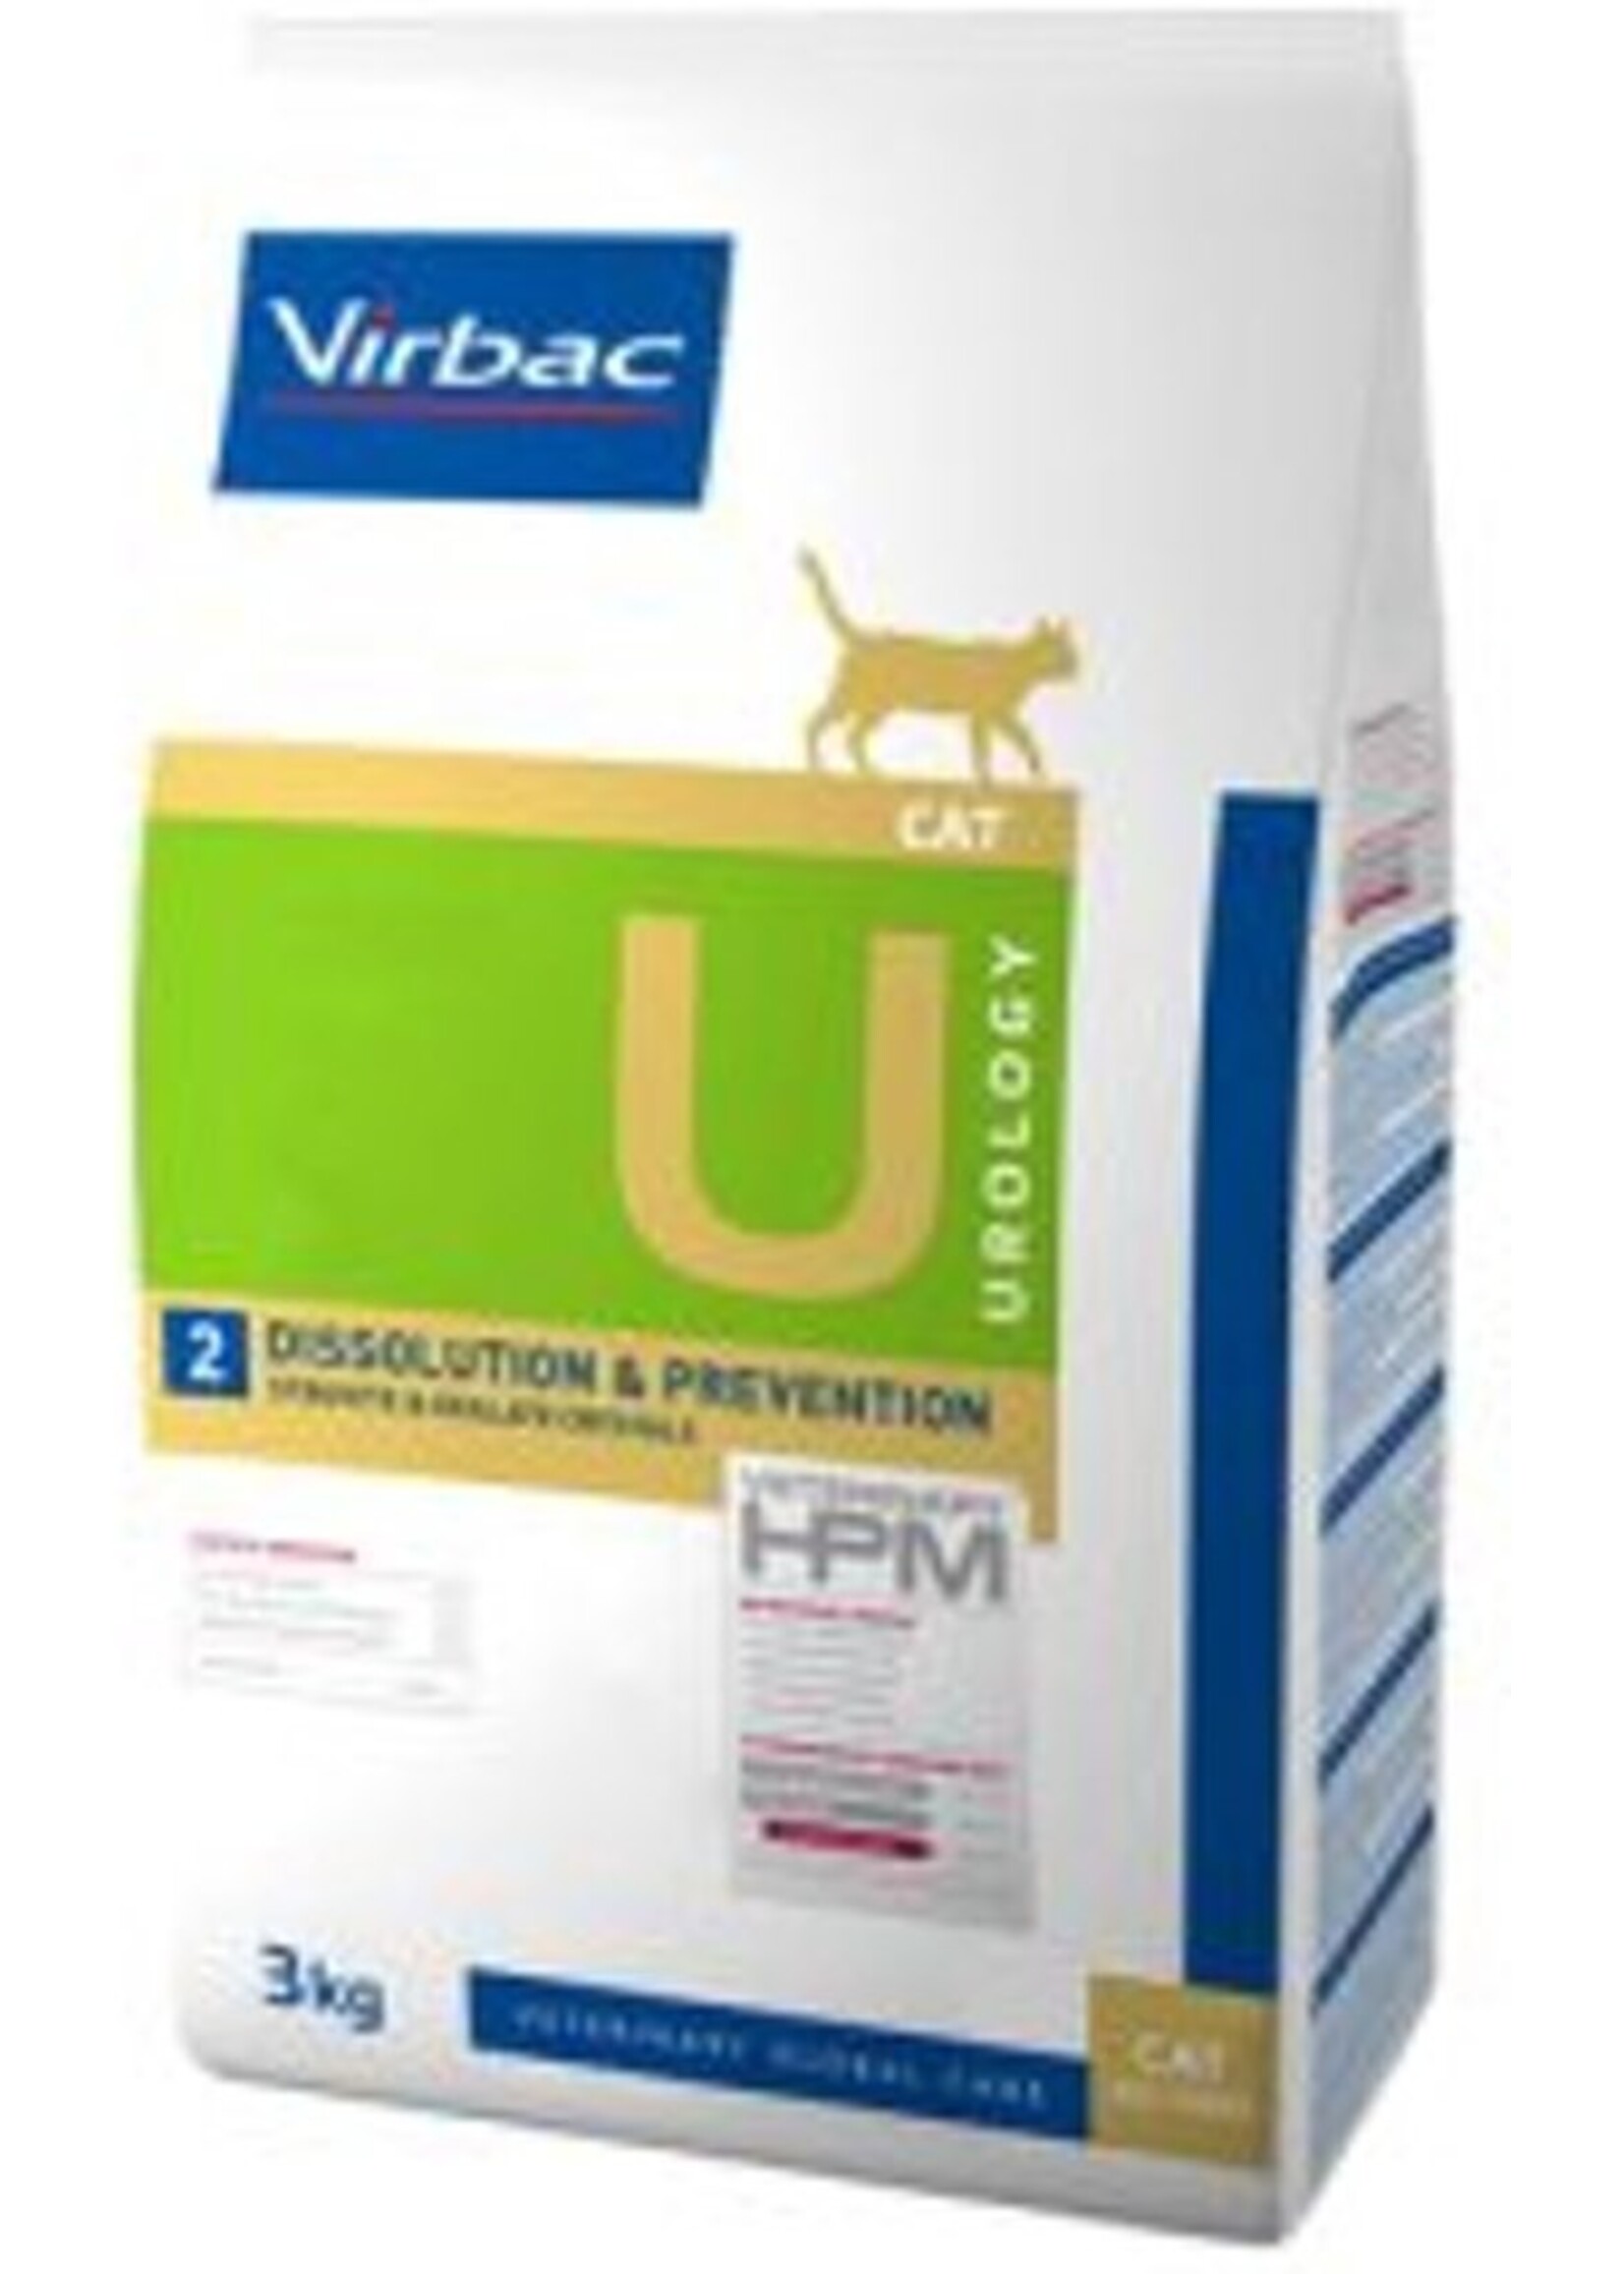 Virbac Virbac Hpm Katze Dissolution/prevention U2 1,5kg